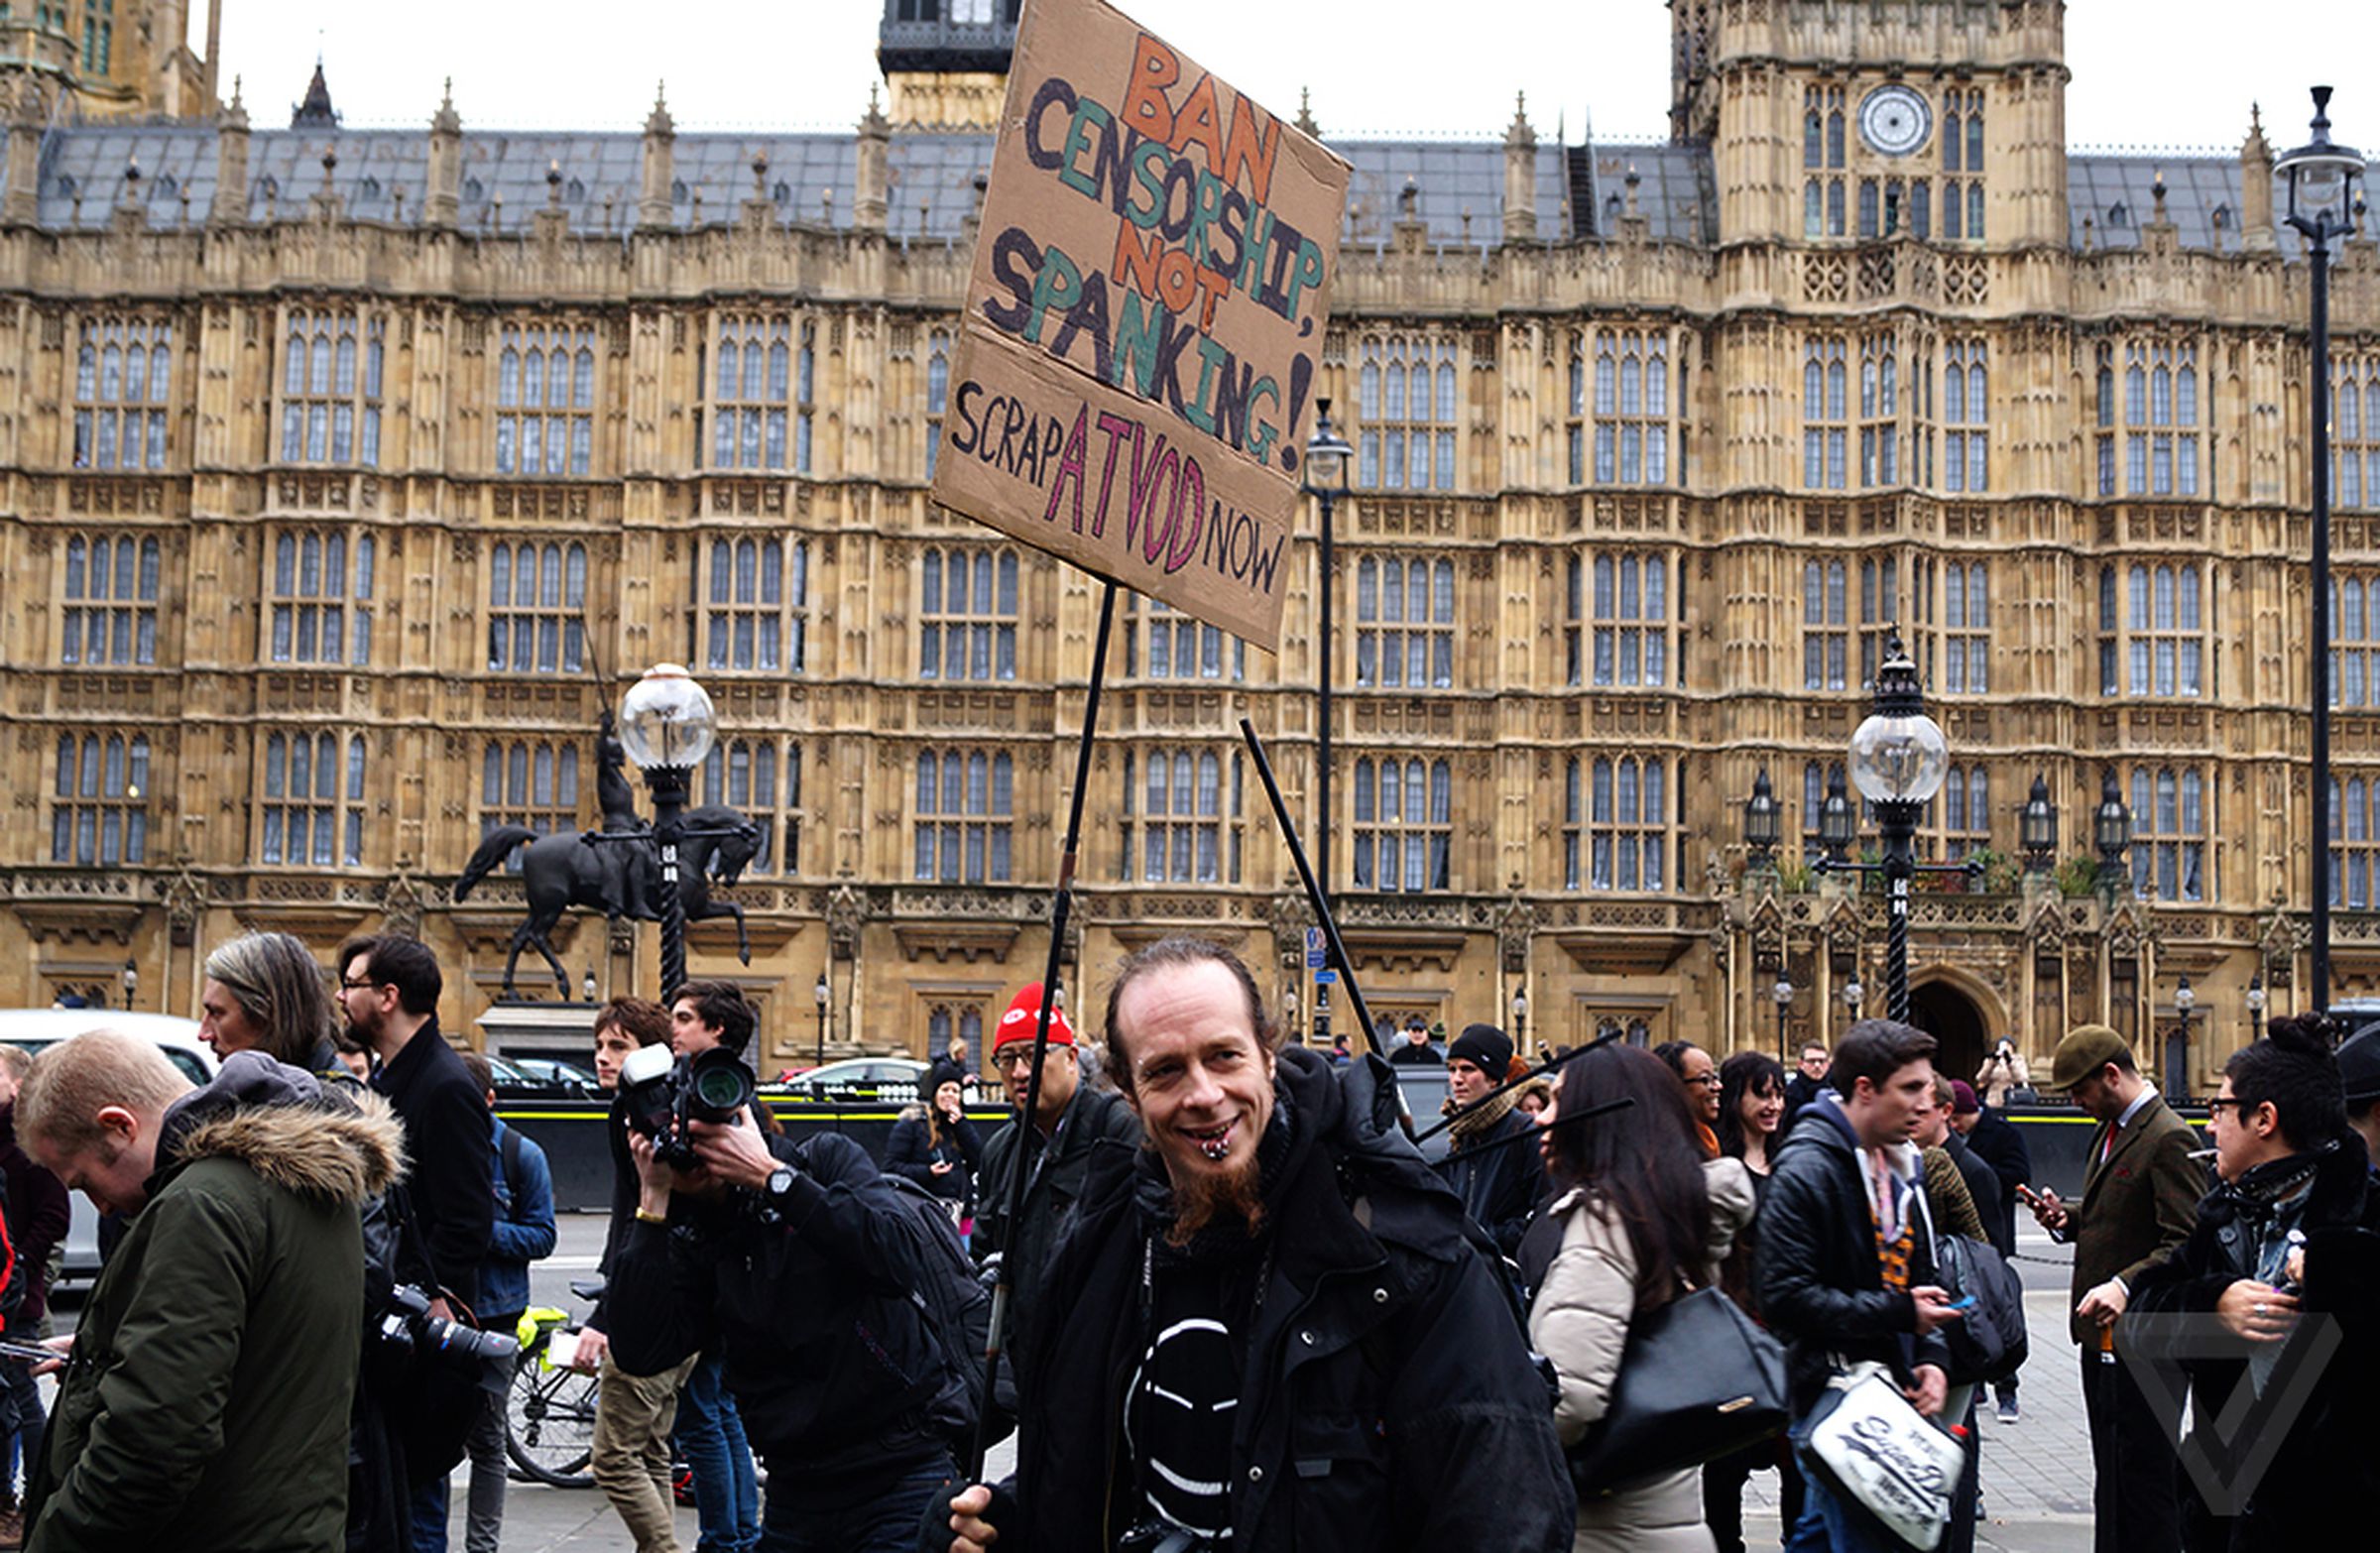 UK porn protest photos